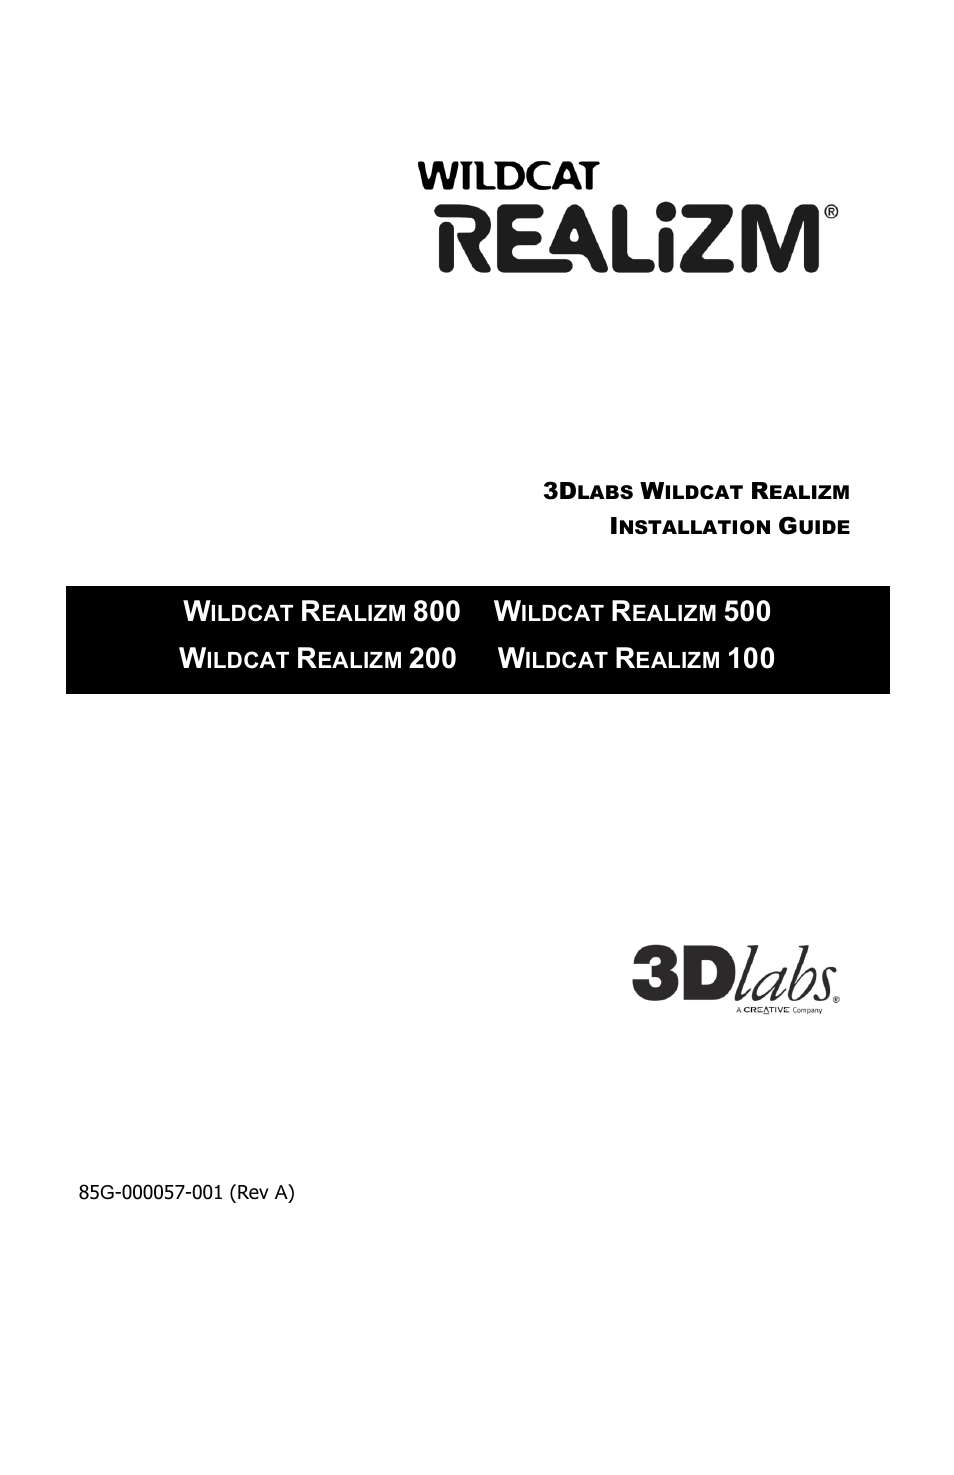 WILDCAT REALIZM 200